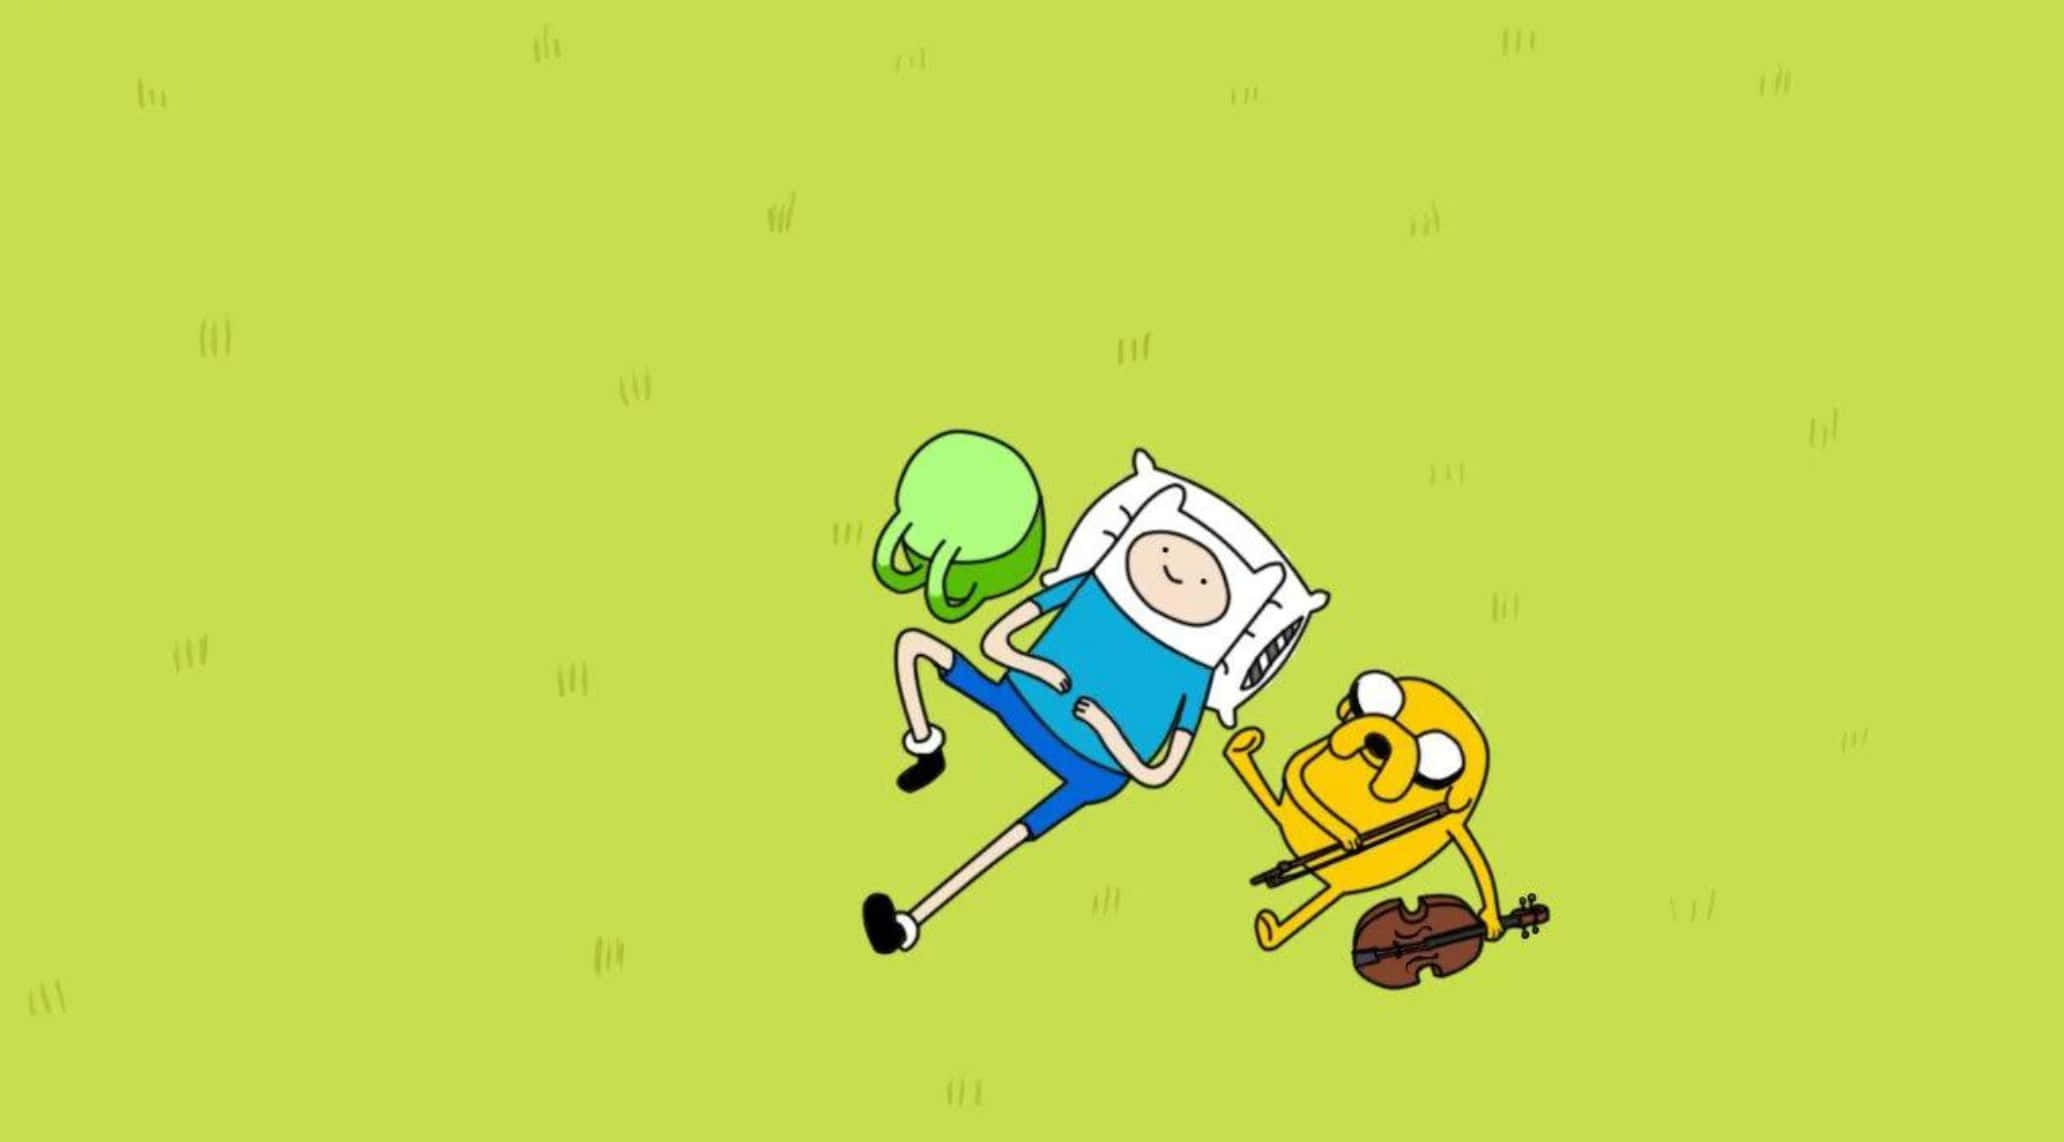 Adventure Time : Finn & Jake's Epic Quest